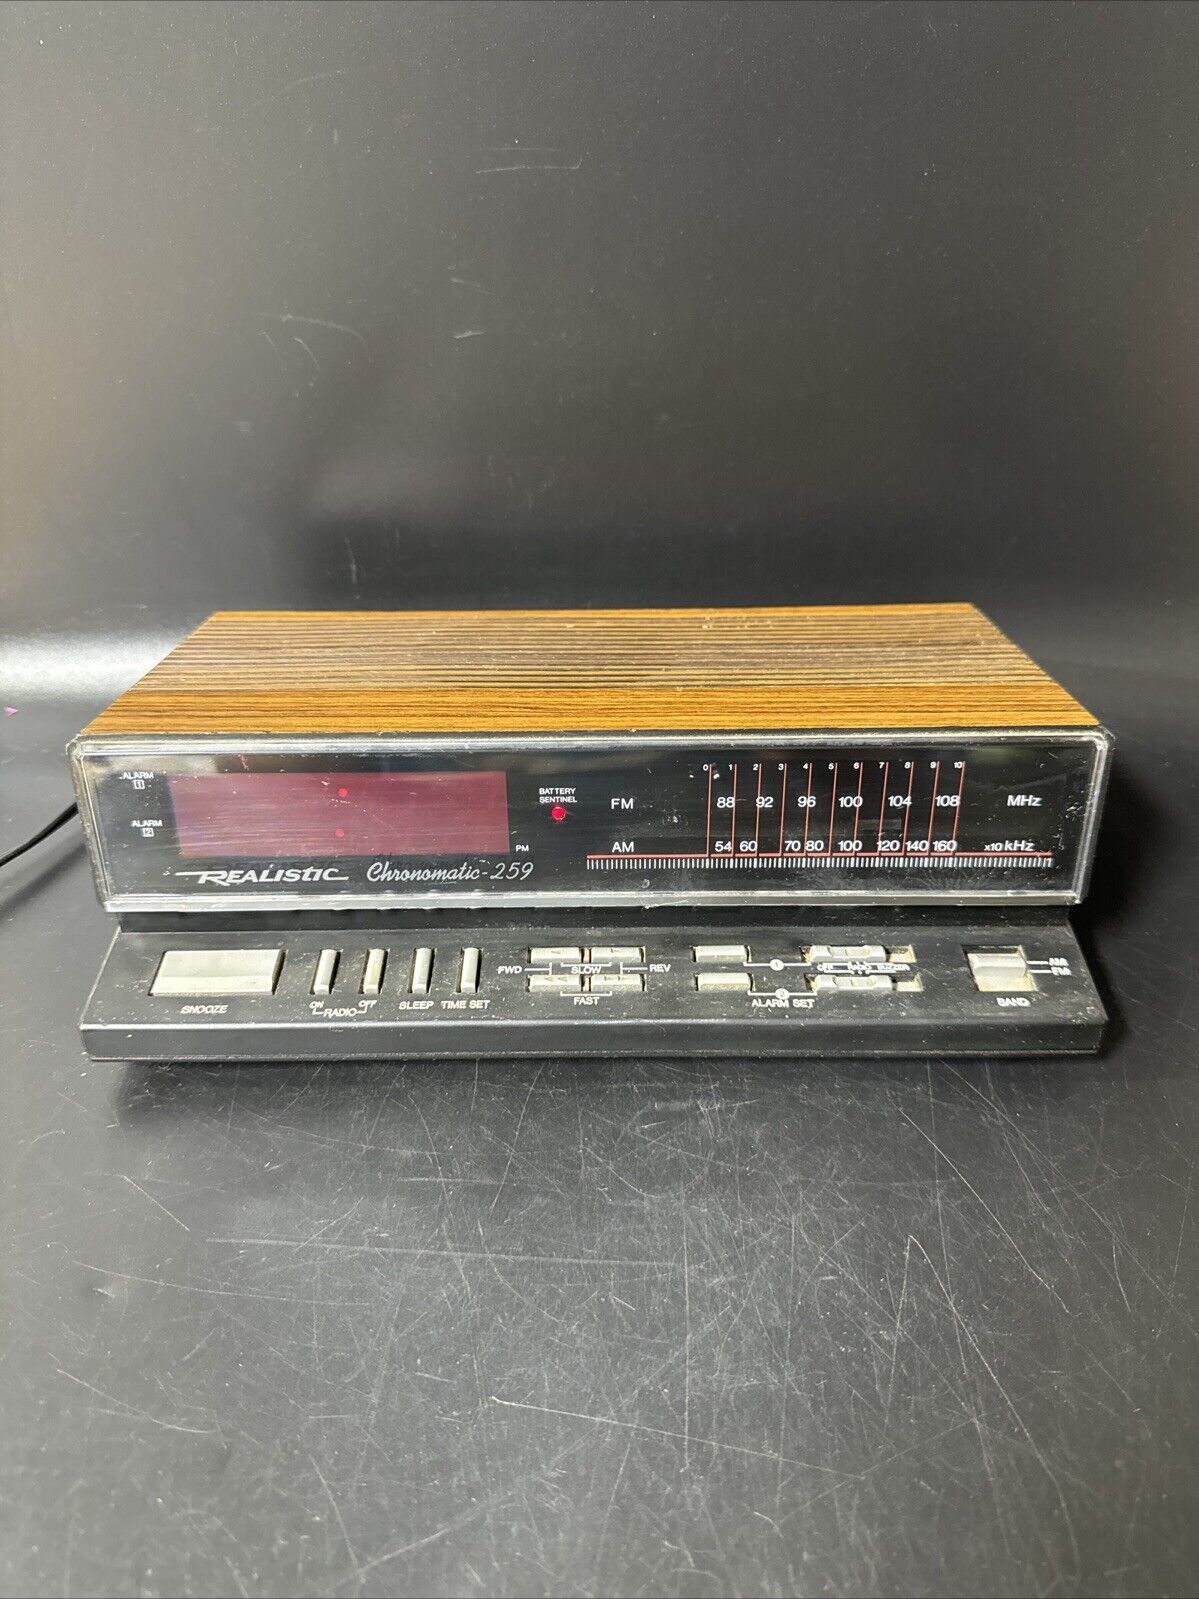 Vintage Realistic Chronomatic-259 AM/FM Clock Radio Model No. 12-1566